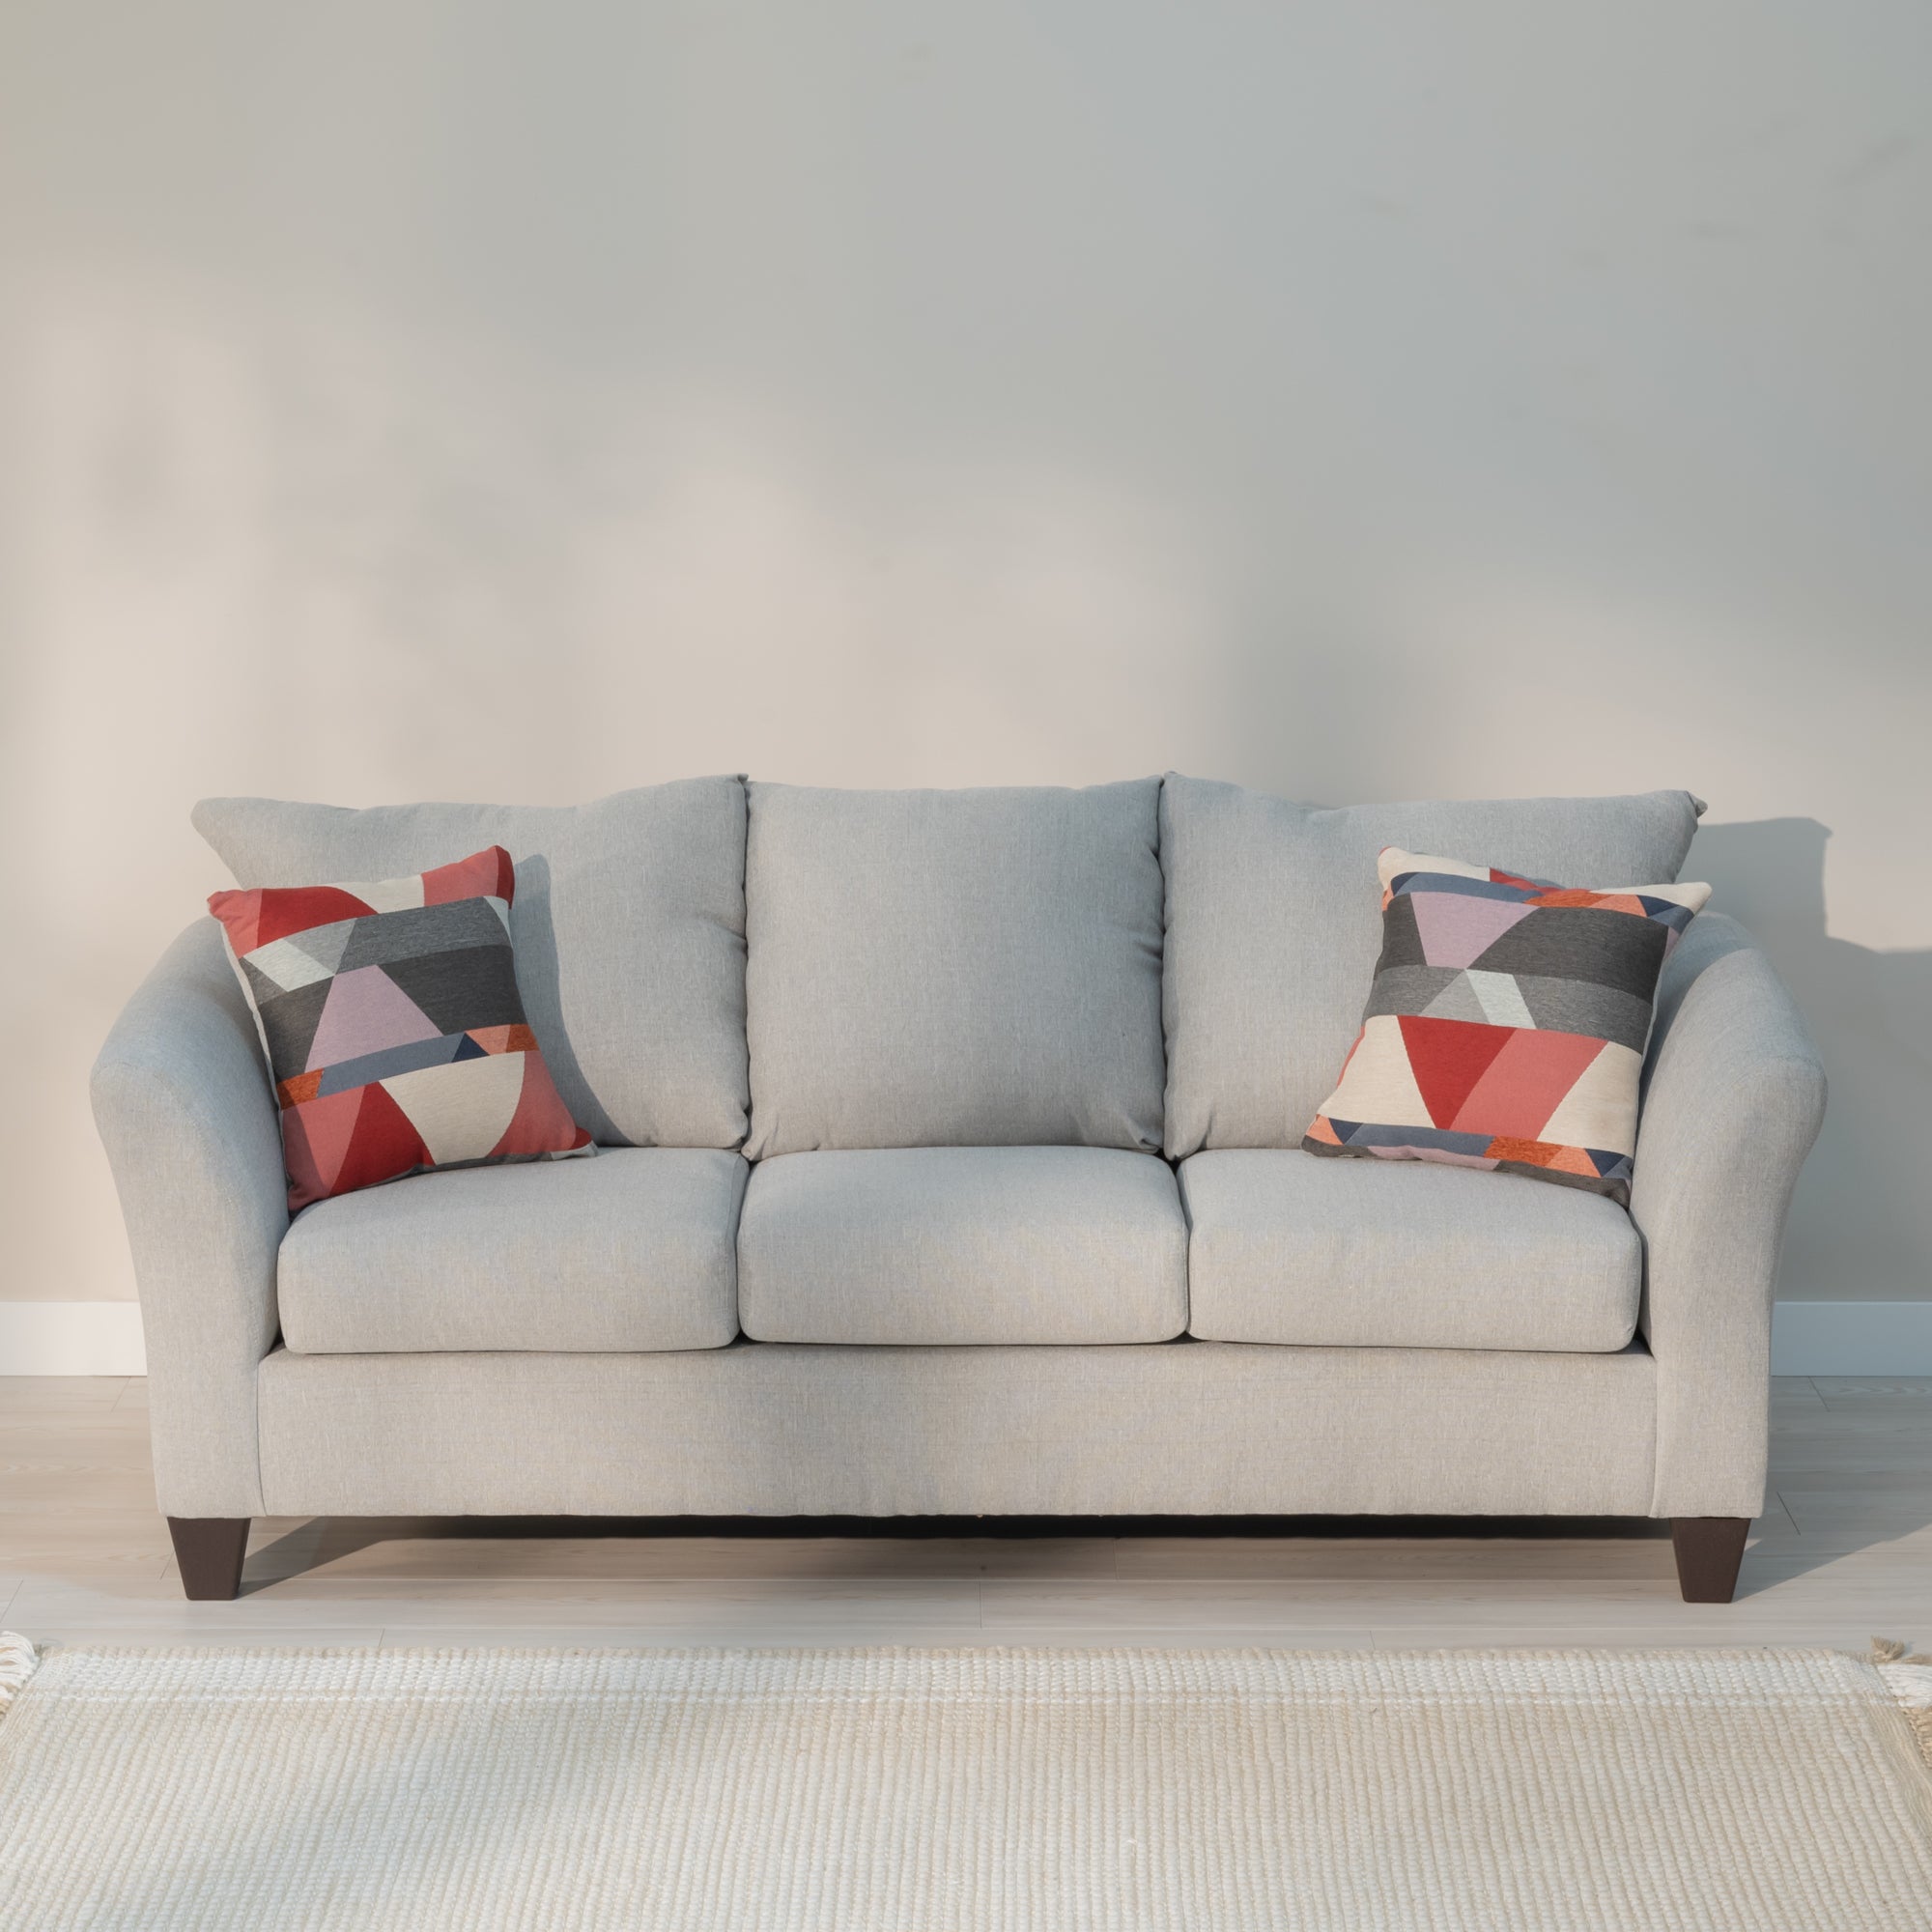 Addington Co Regent Street Sofa (Silver Grey)